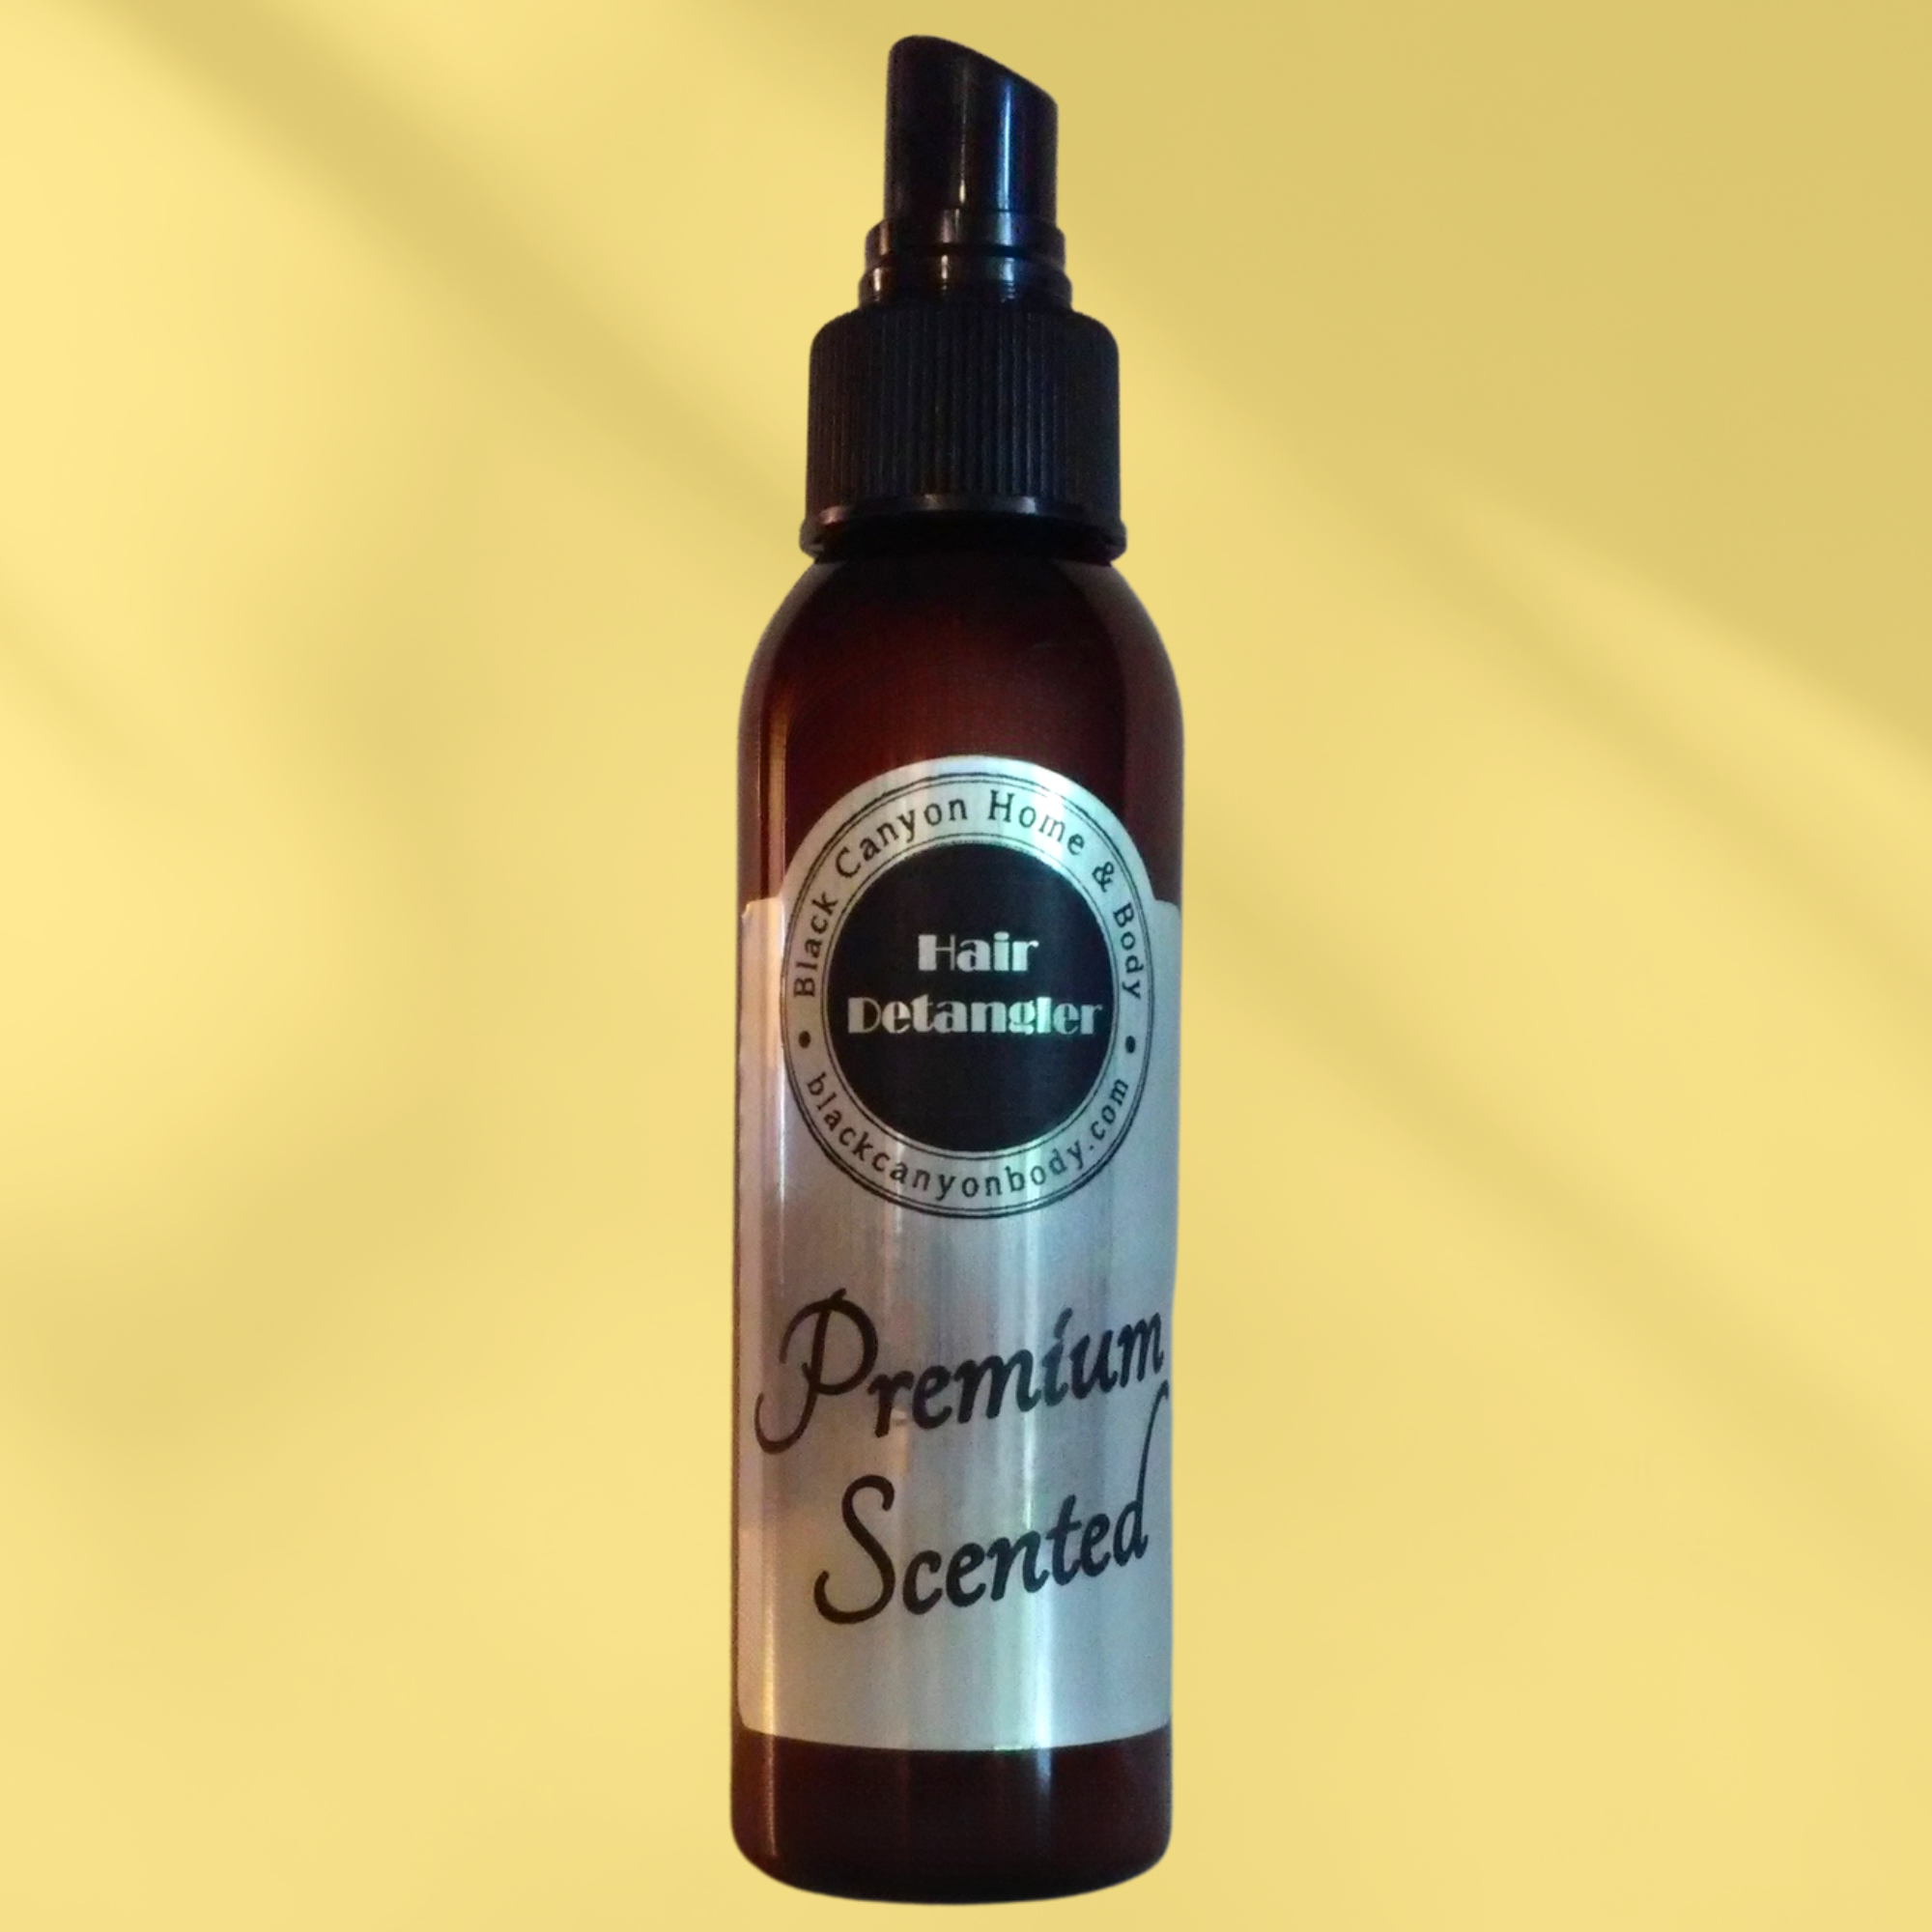 Black Canyon Green Tea & Apple Honey Scented Hair Detangler Spray with Olive Oil